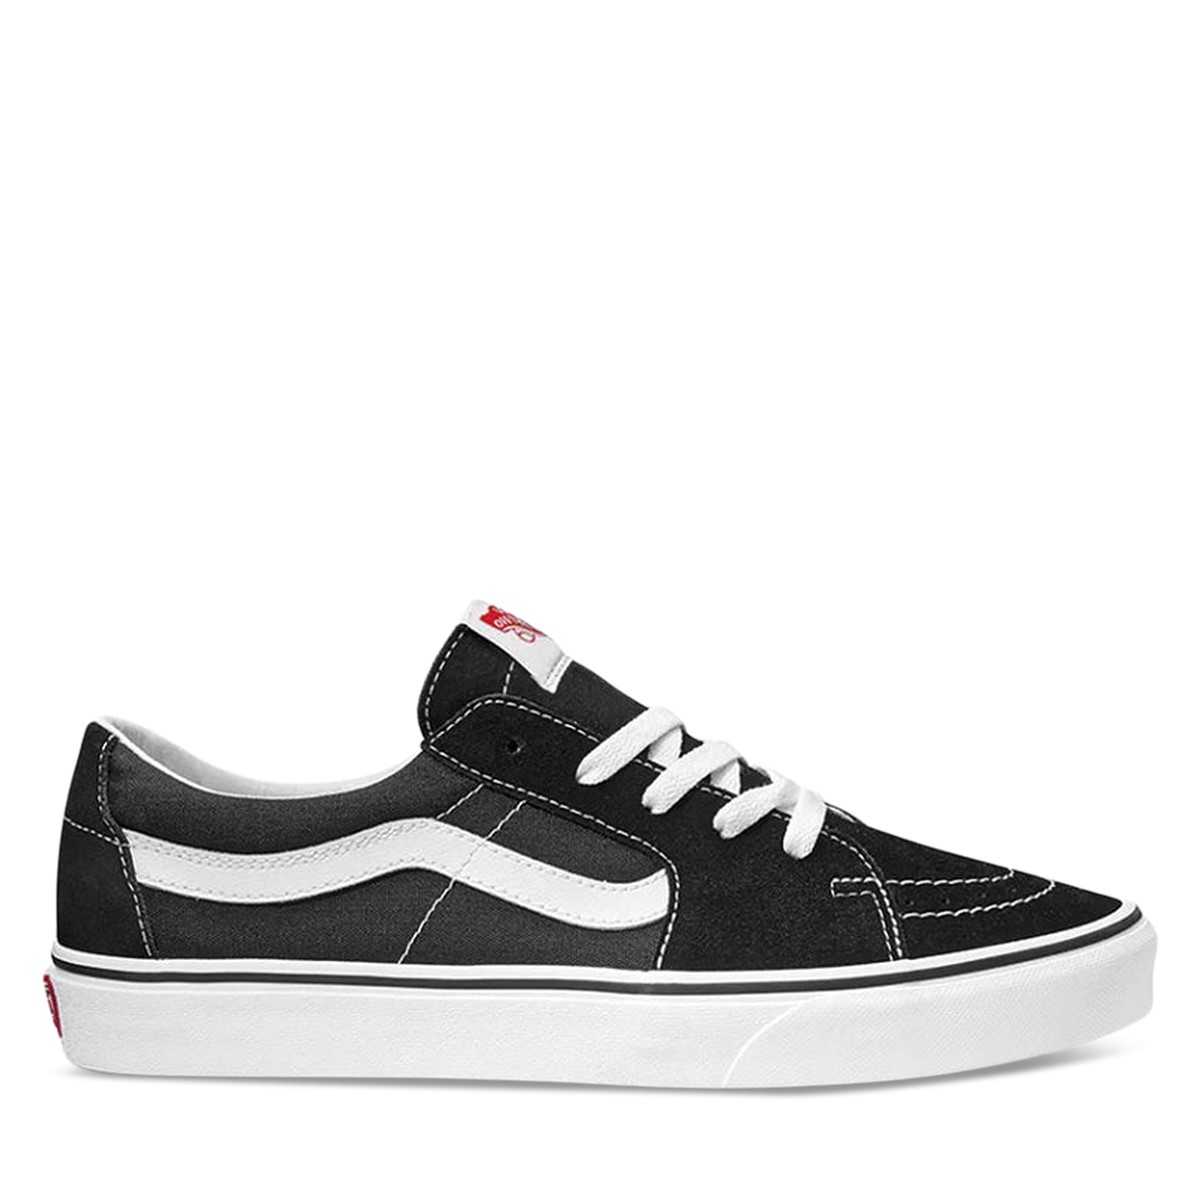 SK8-Low Sneakers in Black/White